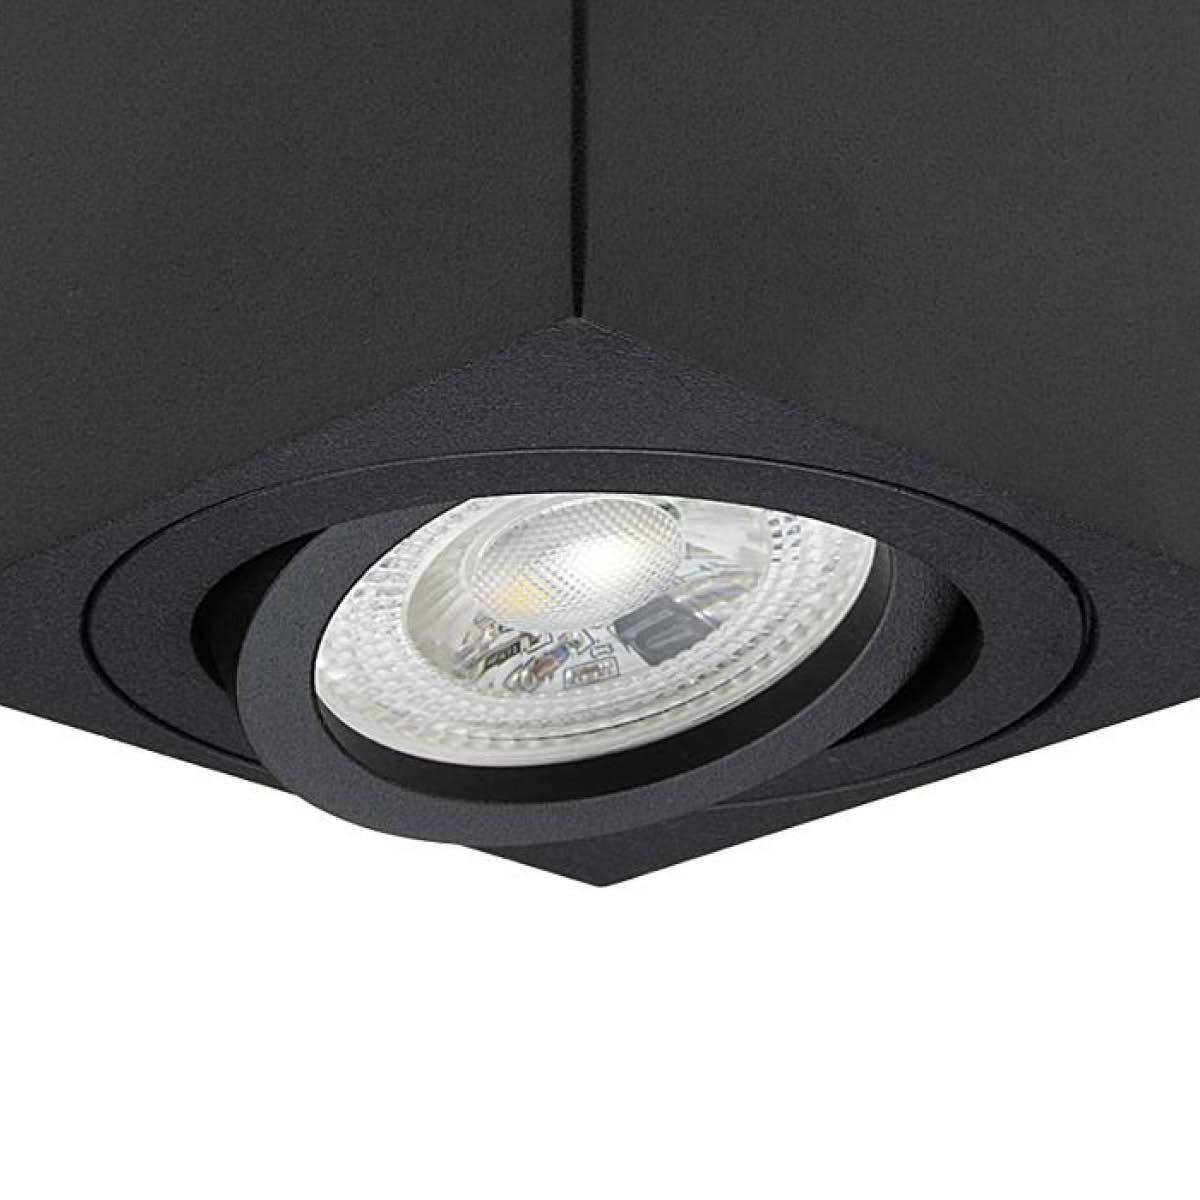 Eckiger Aufbaustrahler schwarz schwenkbar Deckenbeleuchtung - LED Leuchtmittel:  GU10 3W RGBW 230V dimmbar 60°